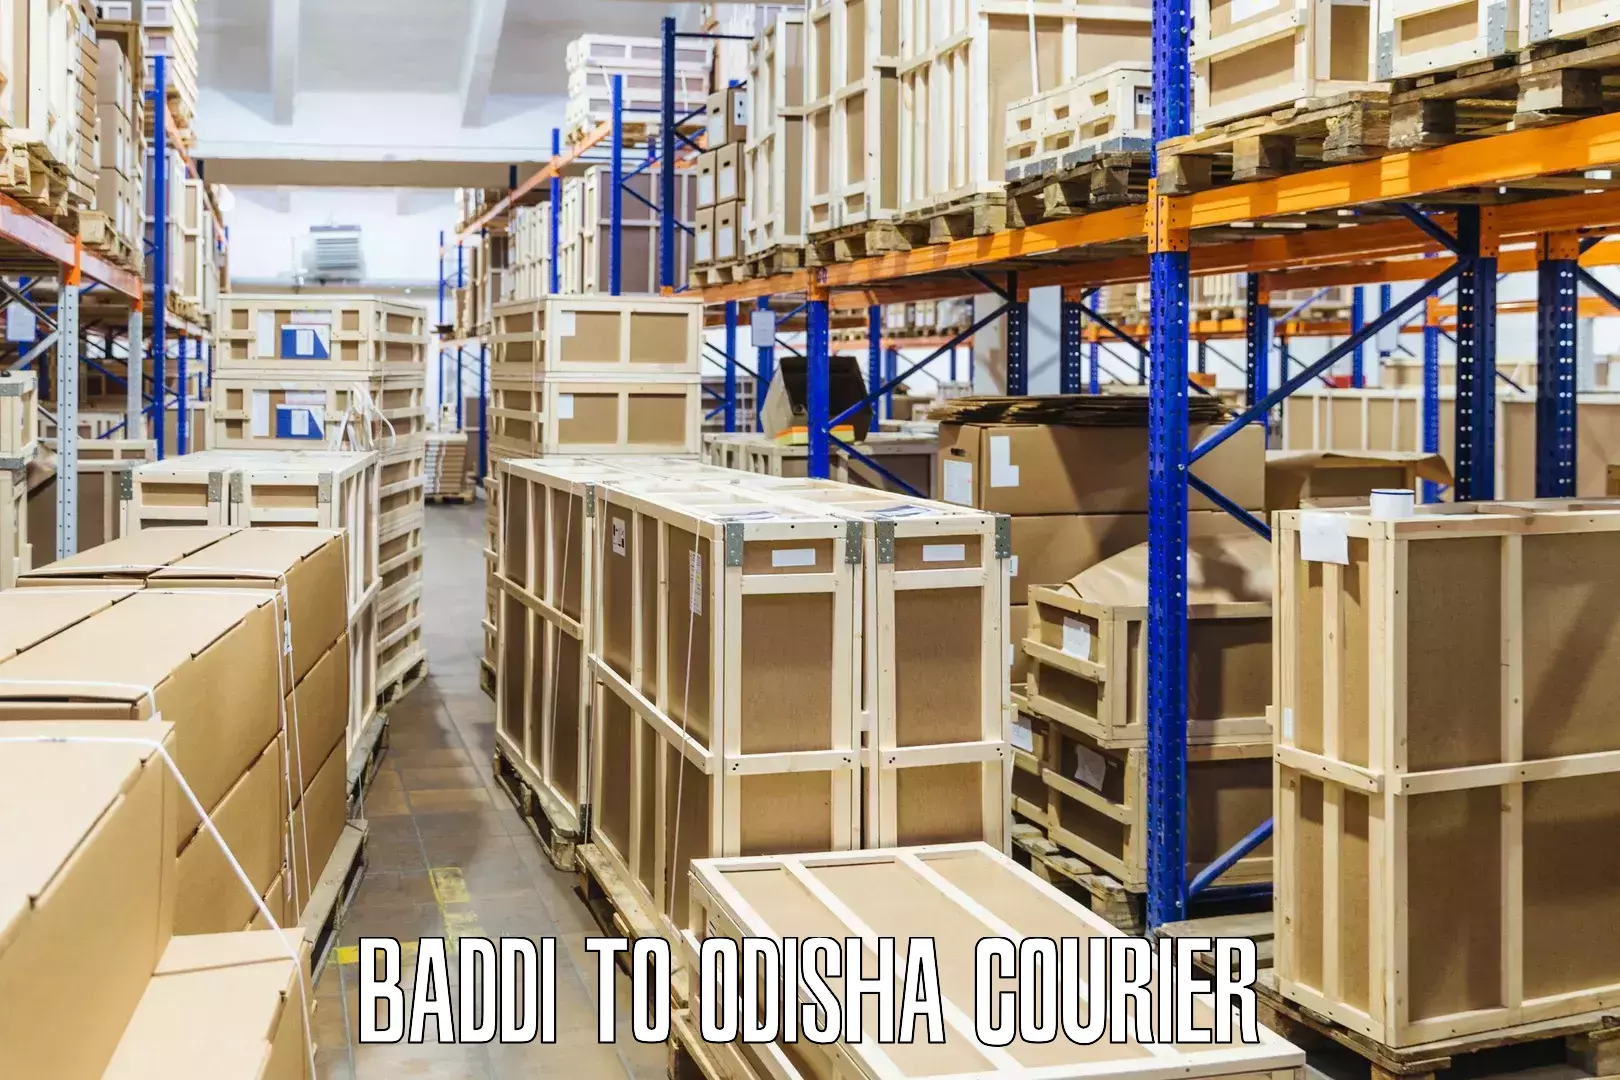 Digital courier platforms Baddi to Odisha